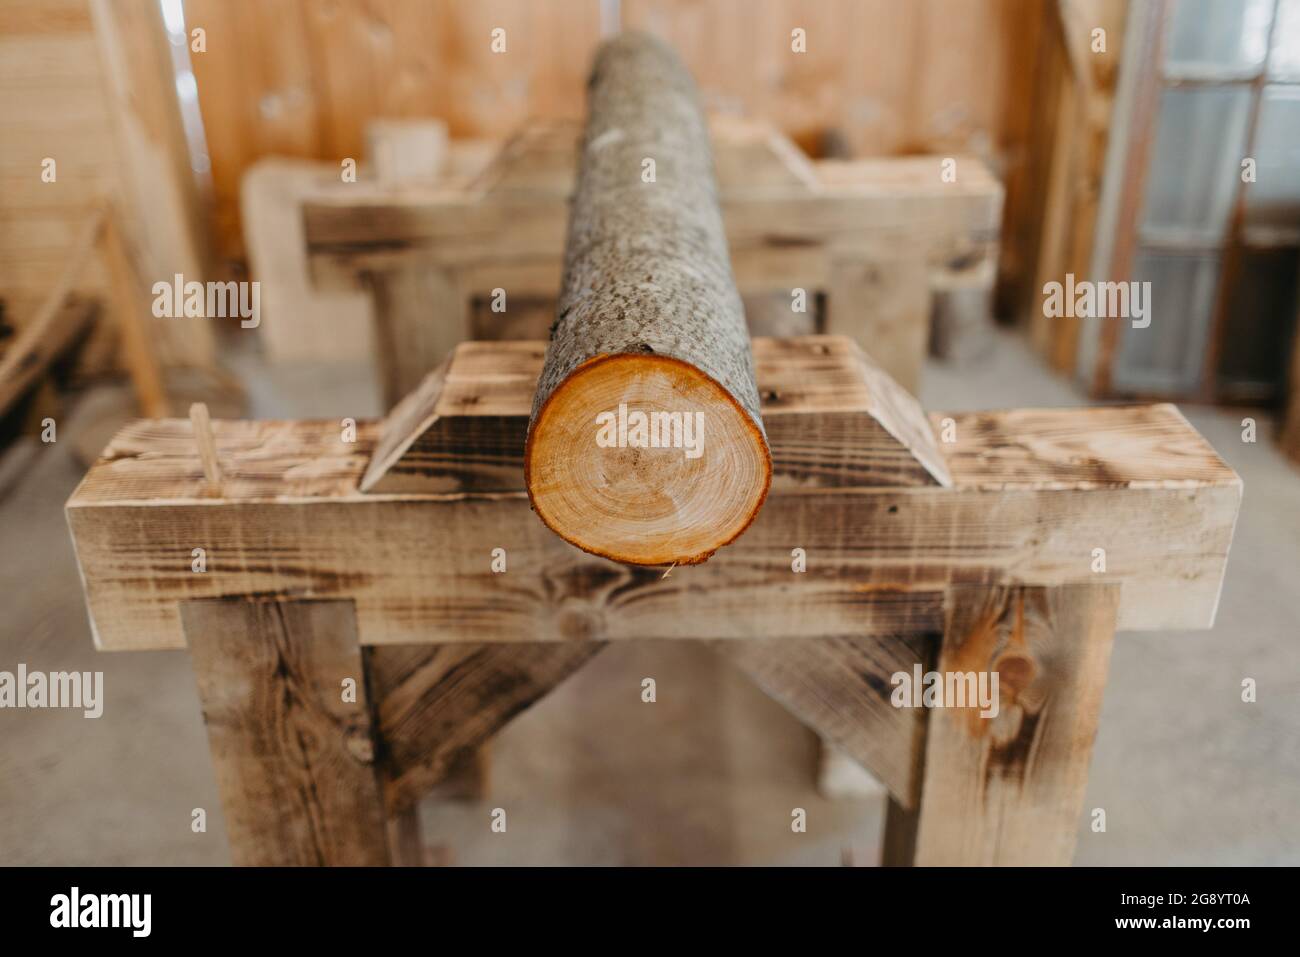 Woodworking process, making wooden pipe, didgeridoo  Stock Photo